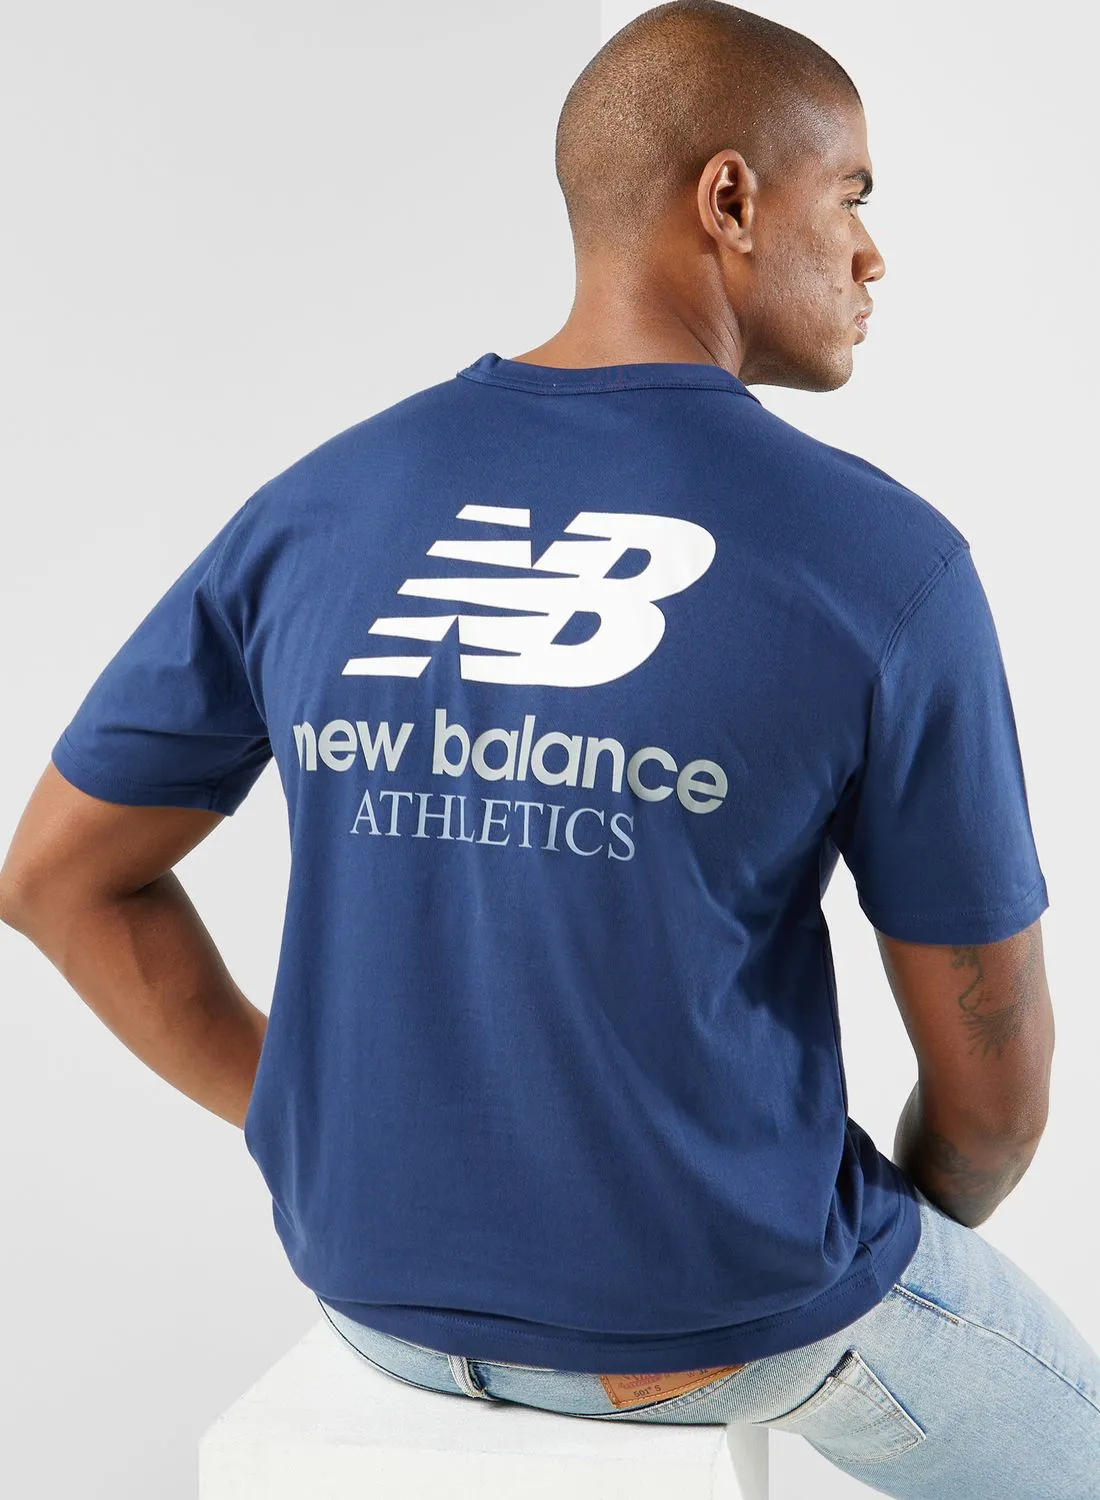 New Balance Athletics Graphic Brand T-Shirt